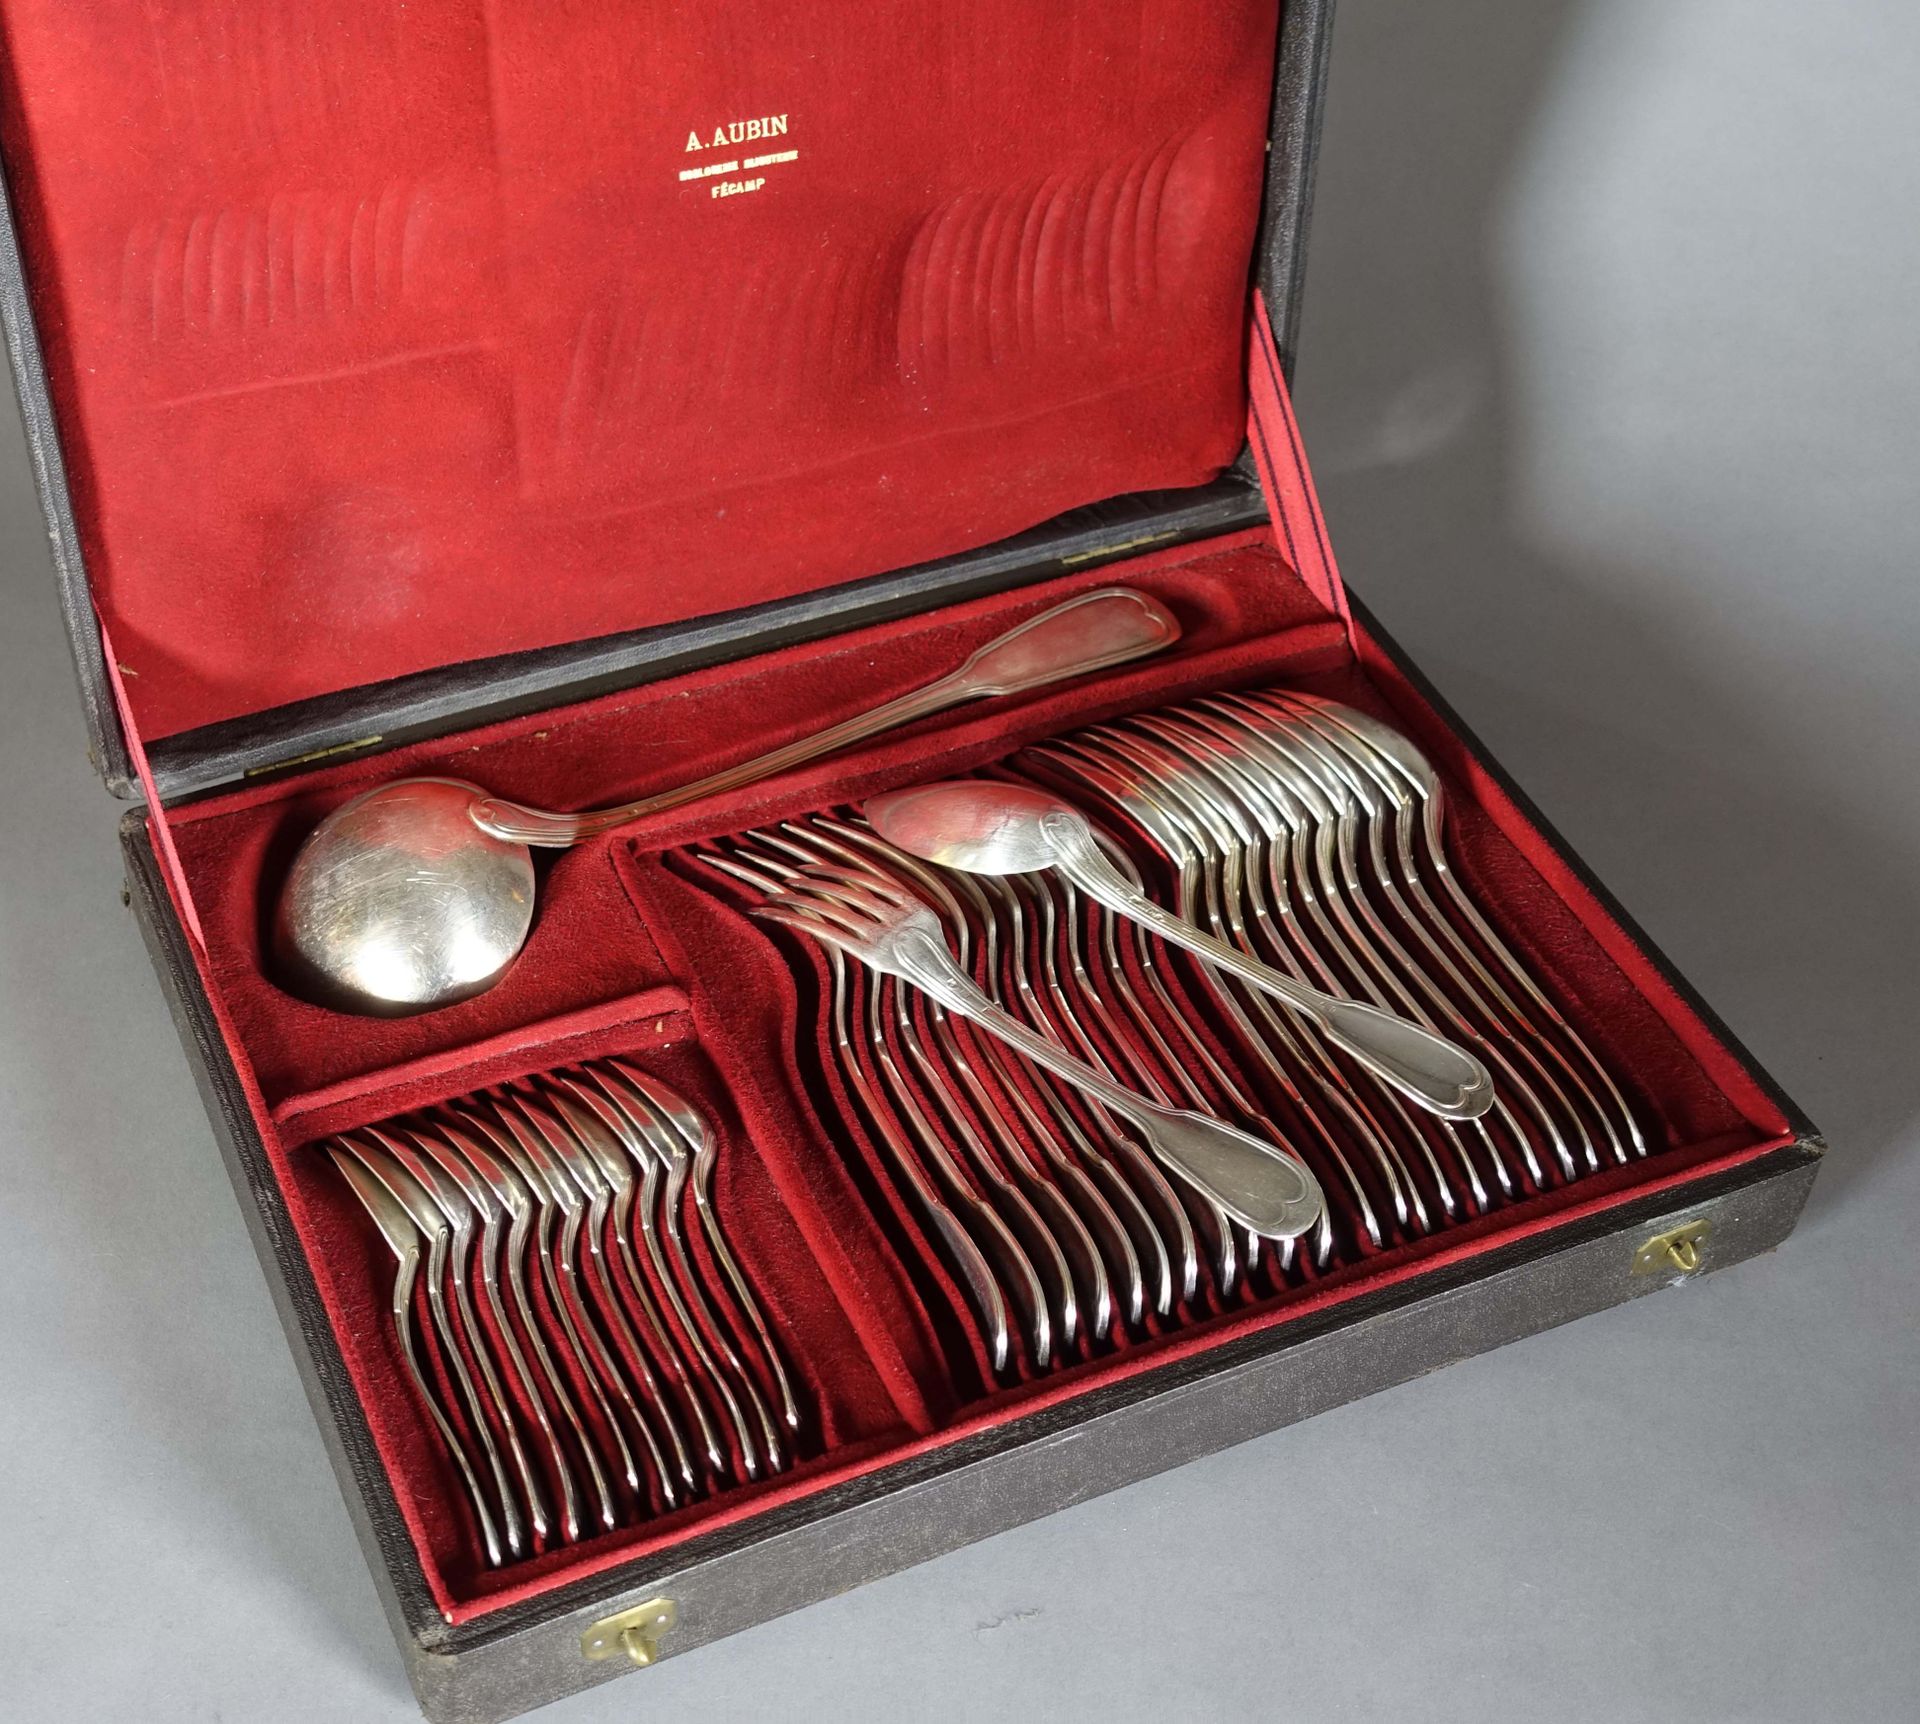 Null In a box, white metal menagere including: twelve large cutlery, twelve smal&hellip;